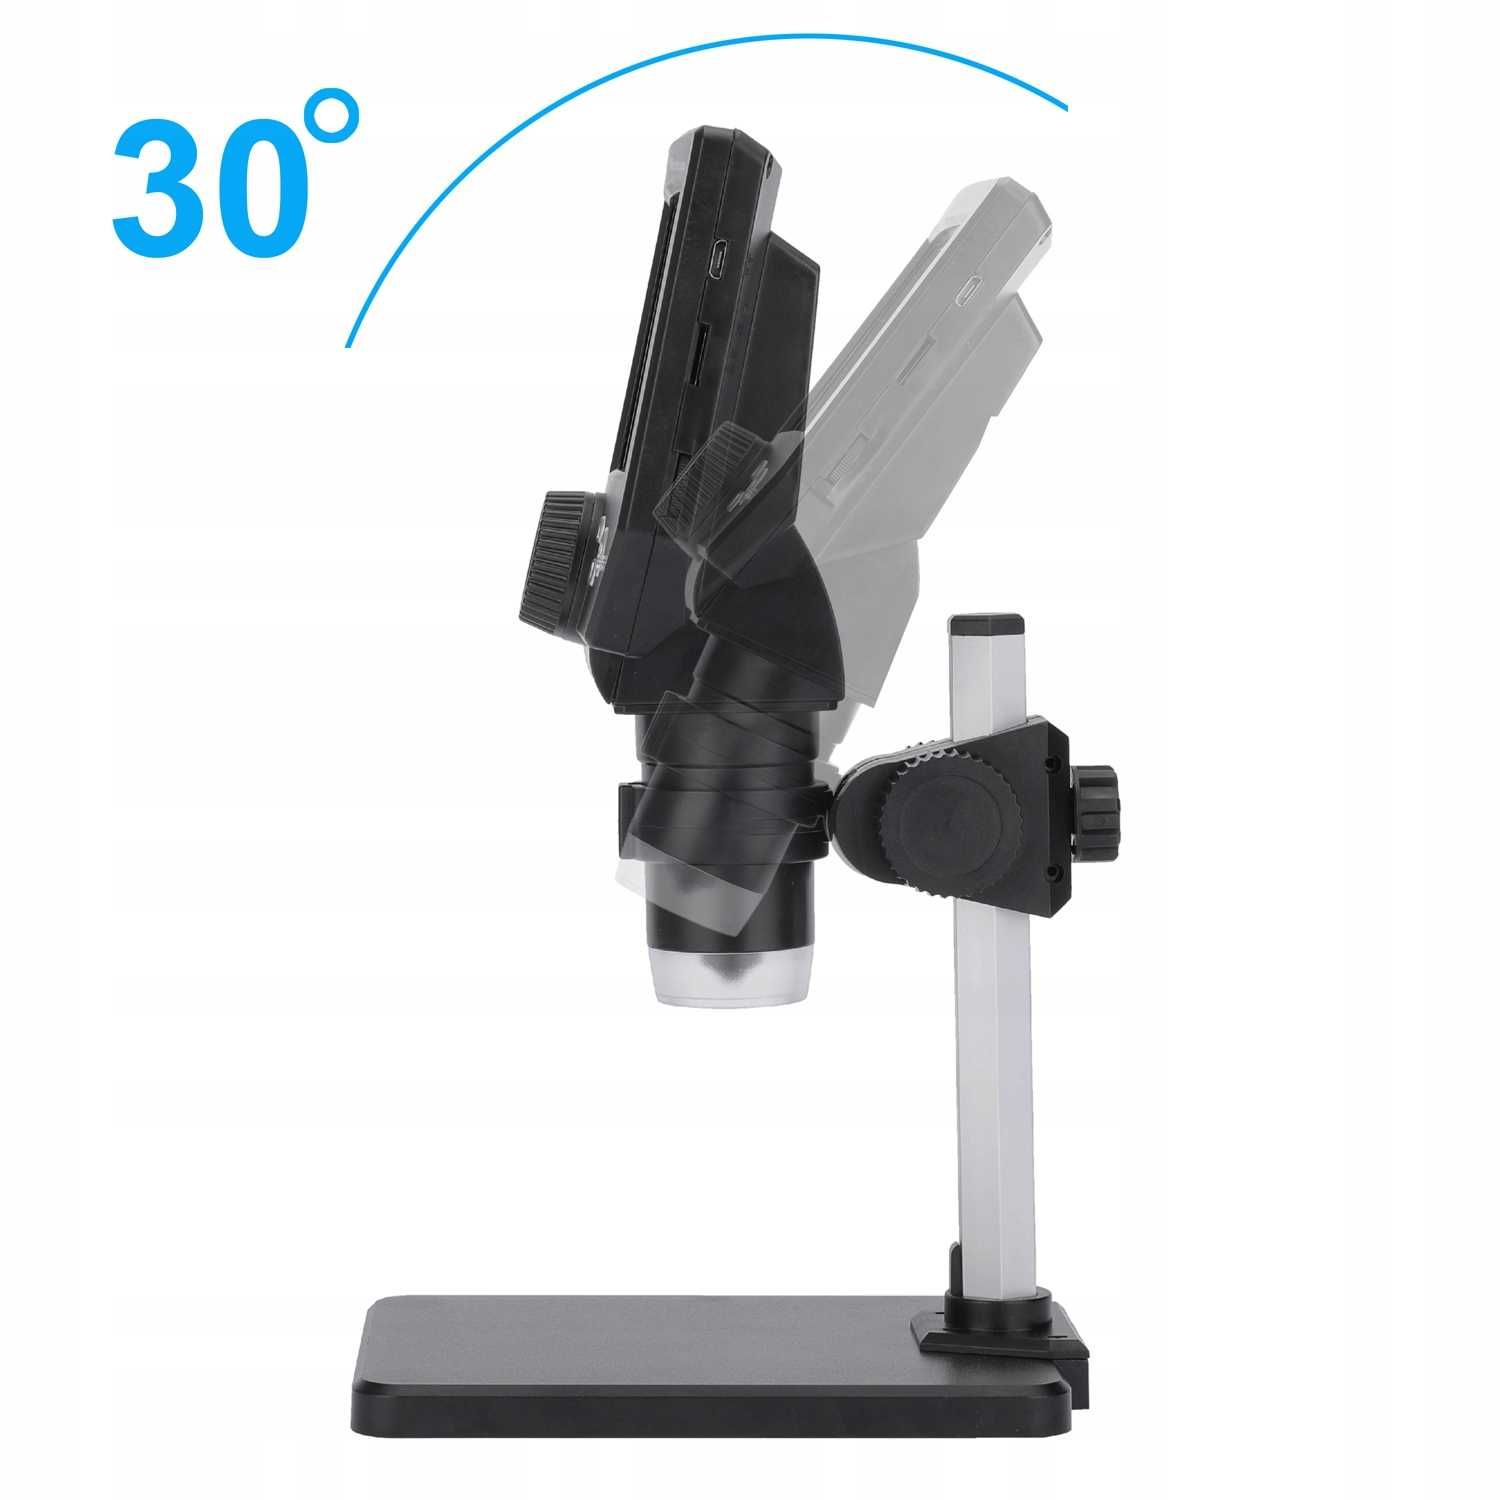 Mikroskop Cyfrowy LCD HD 4.3" 10MP 1-1000X G1000